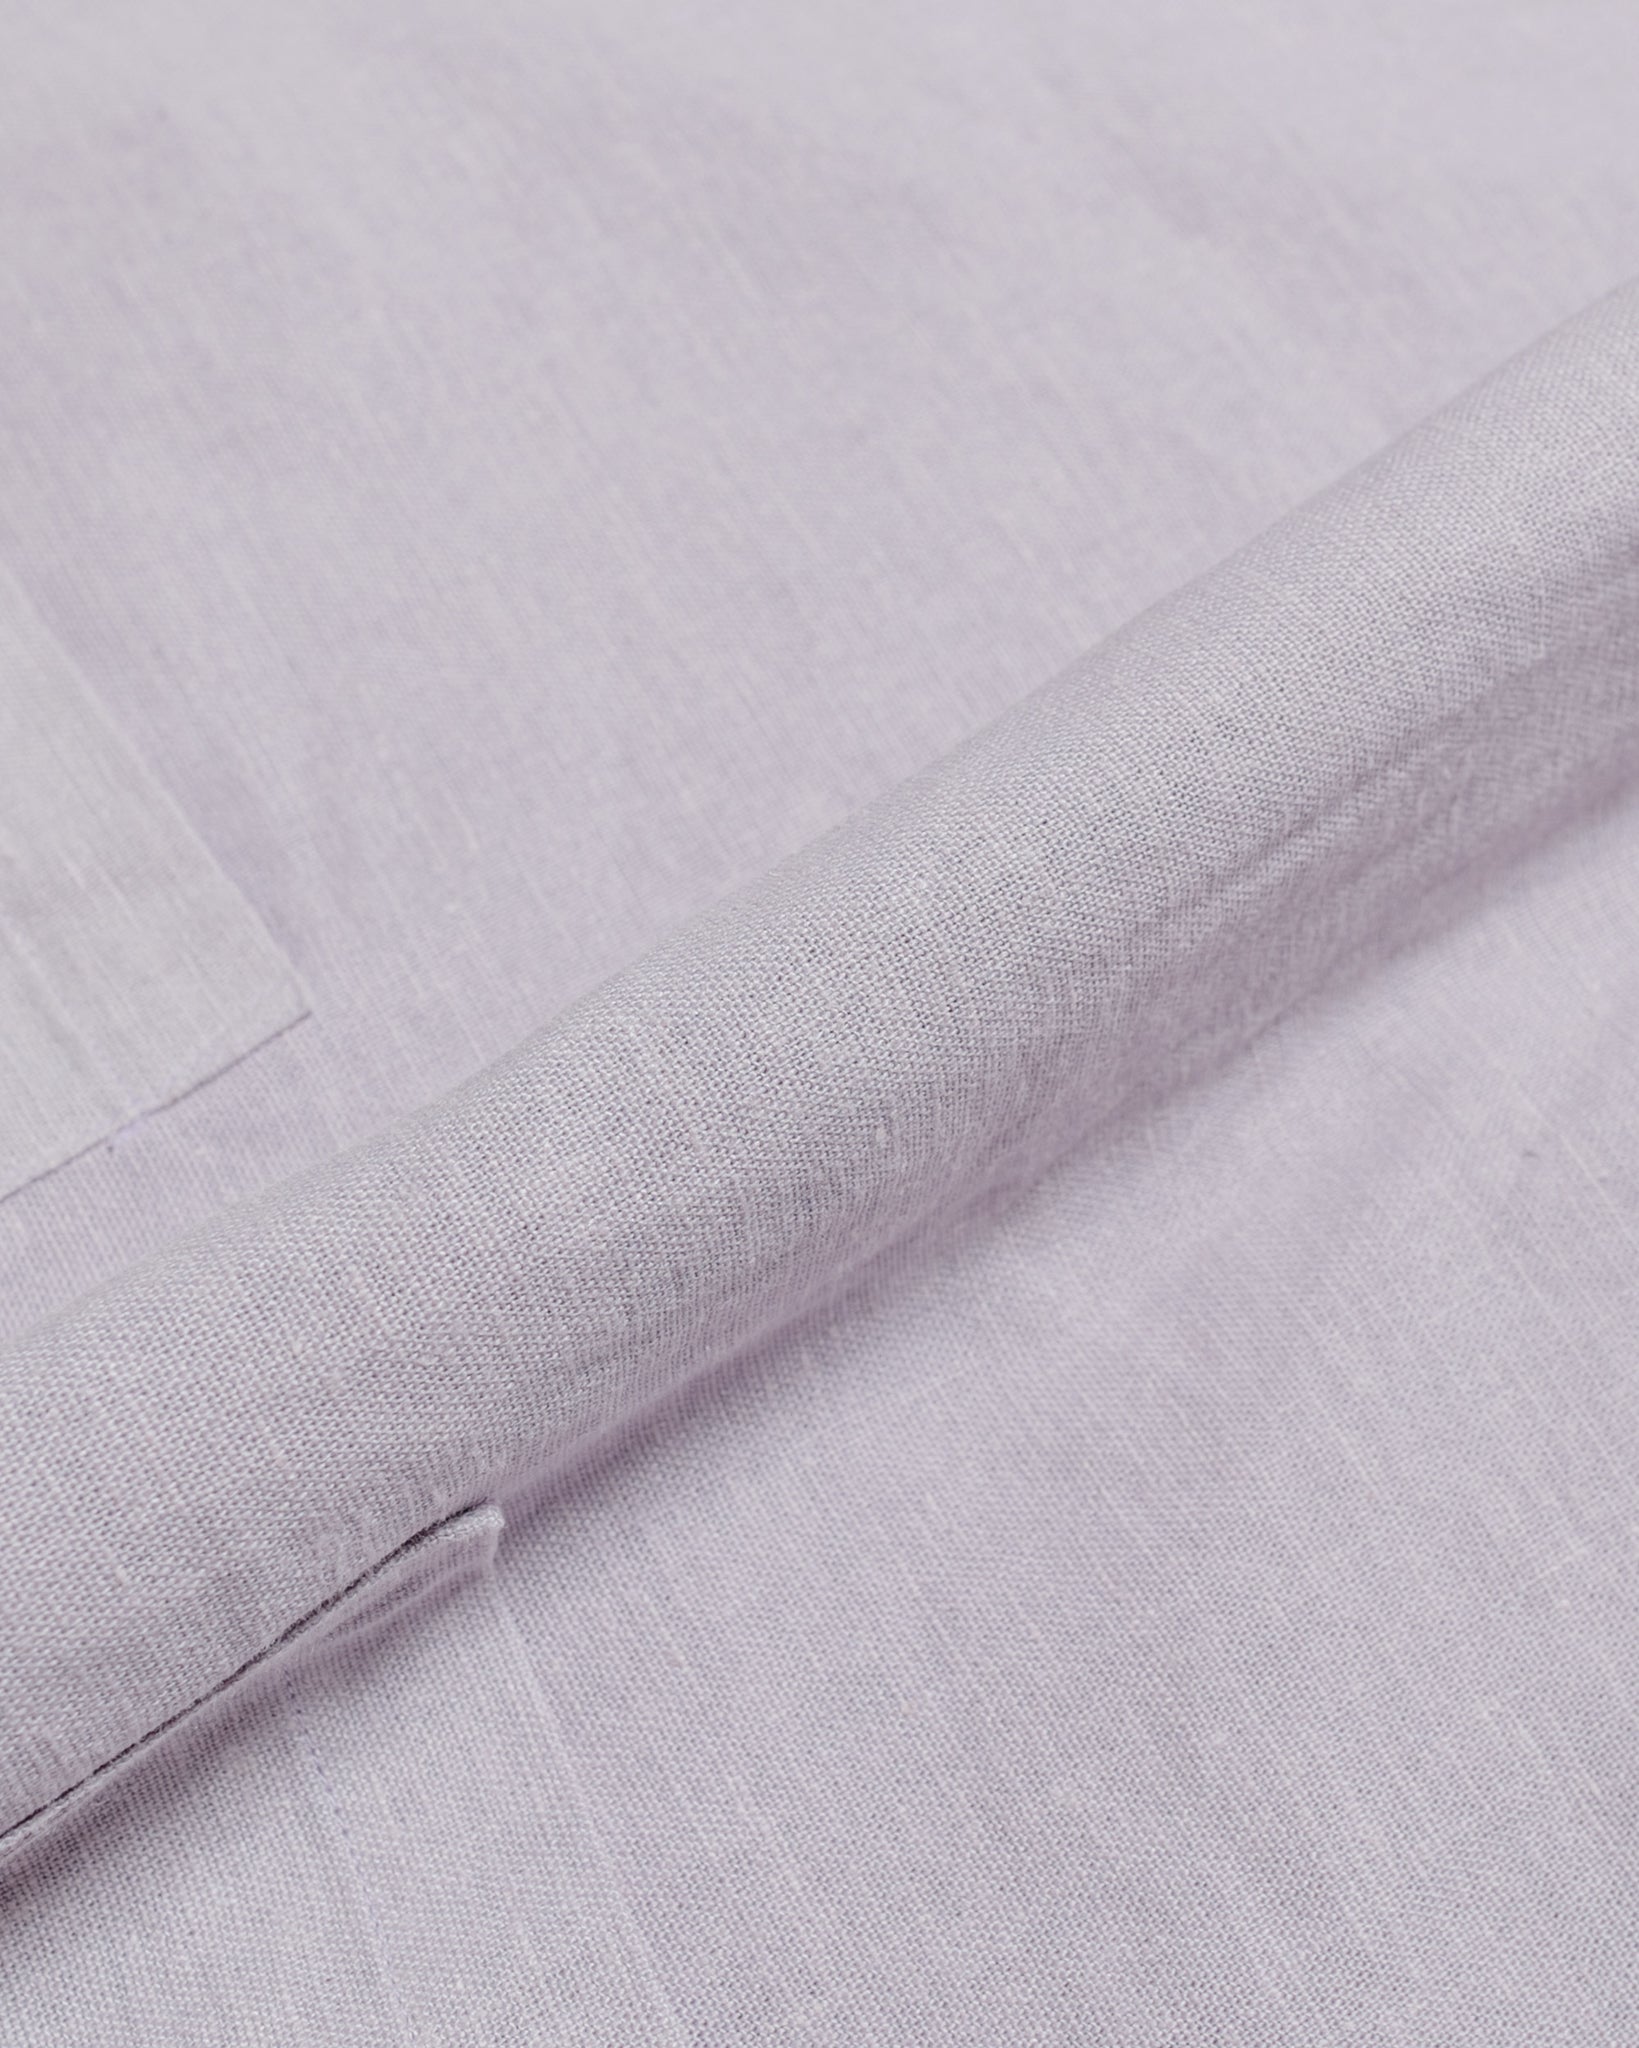 Bather Lavender Linen Traveler Shirt fabric